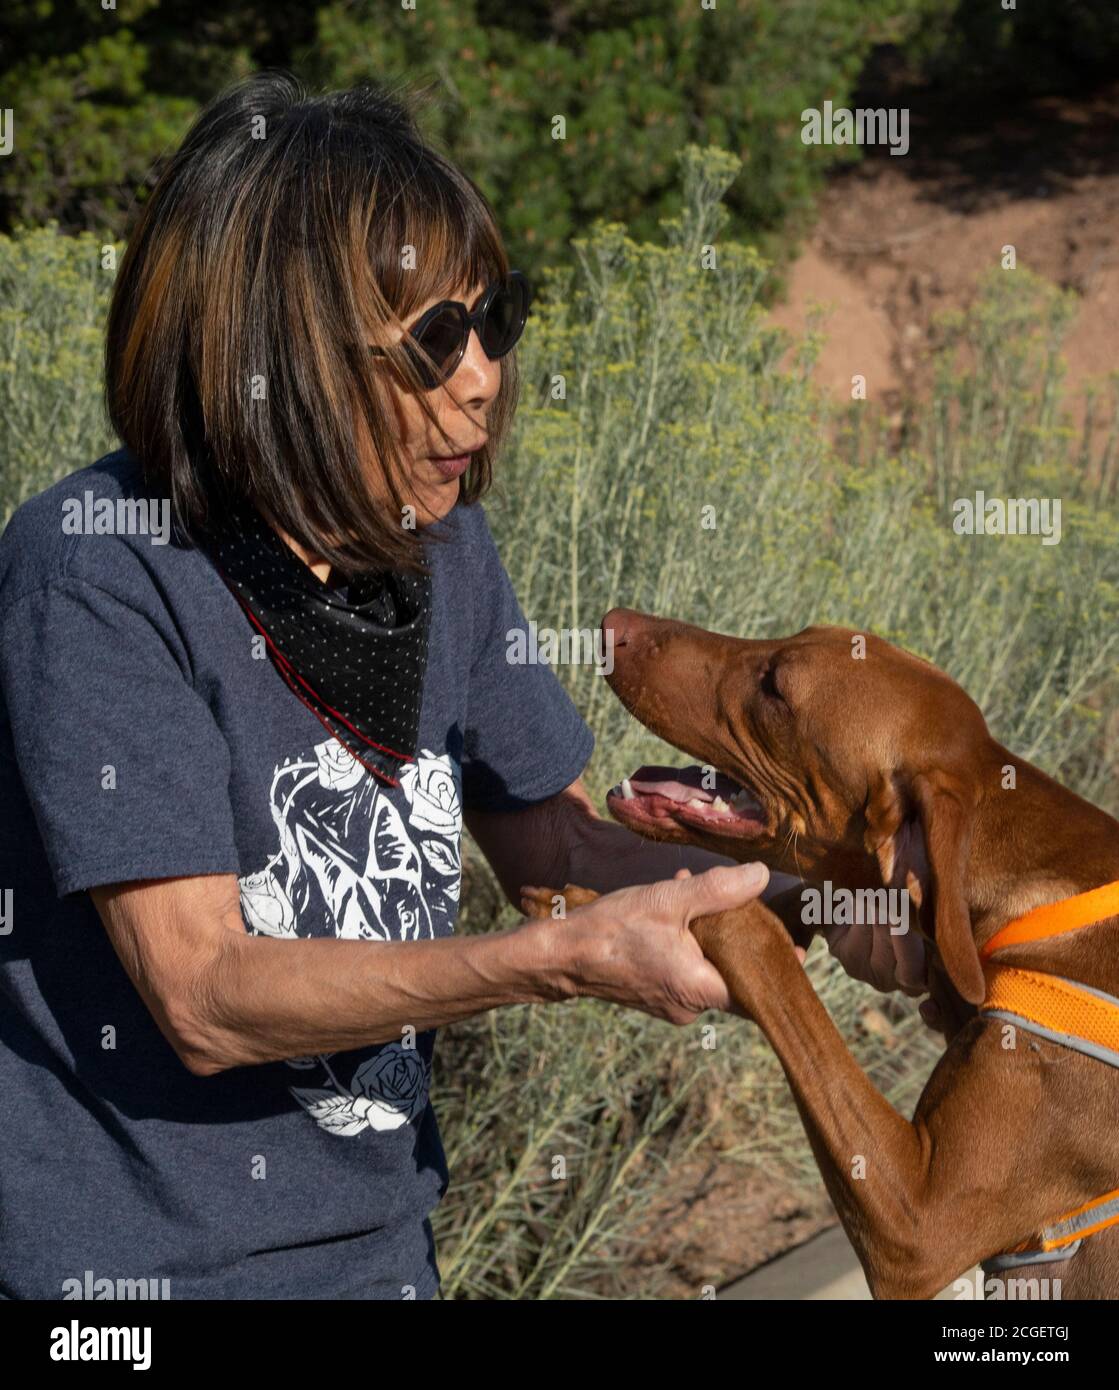 A woman pets a neighbor's pet dog, a Vizla, during a morning walk in Santa Fe, New Mexico. Stock Photo